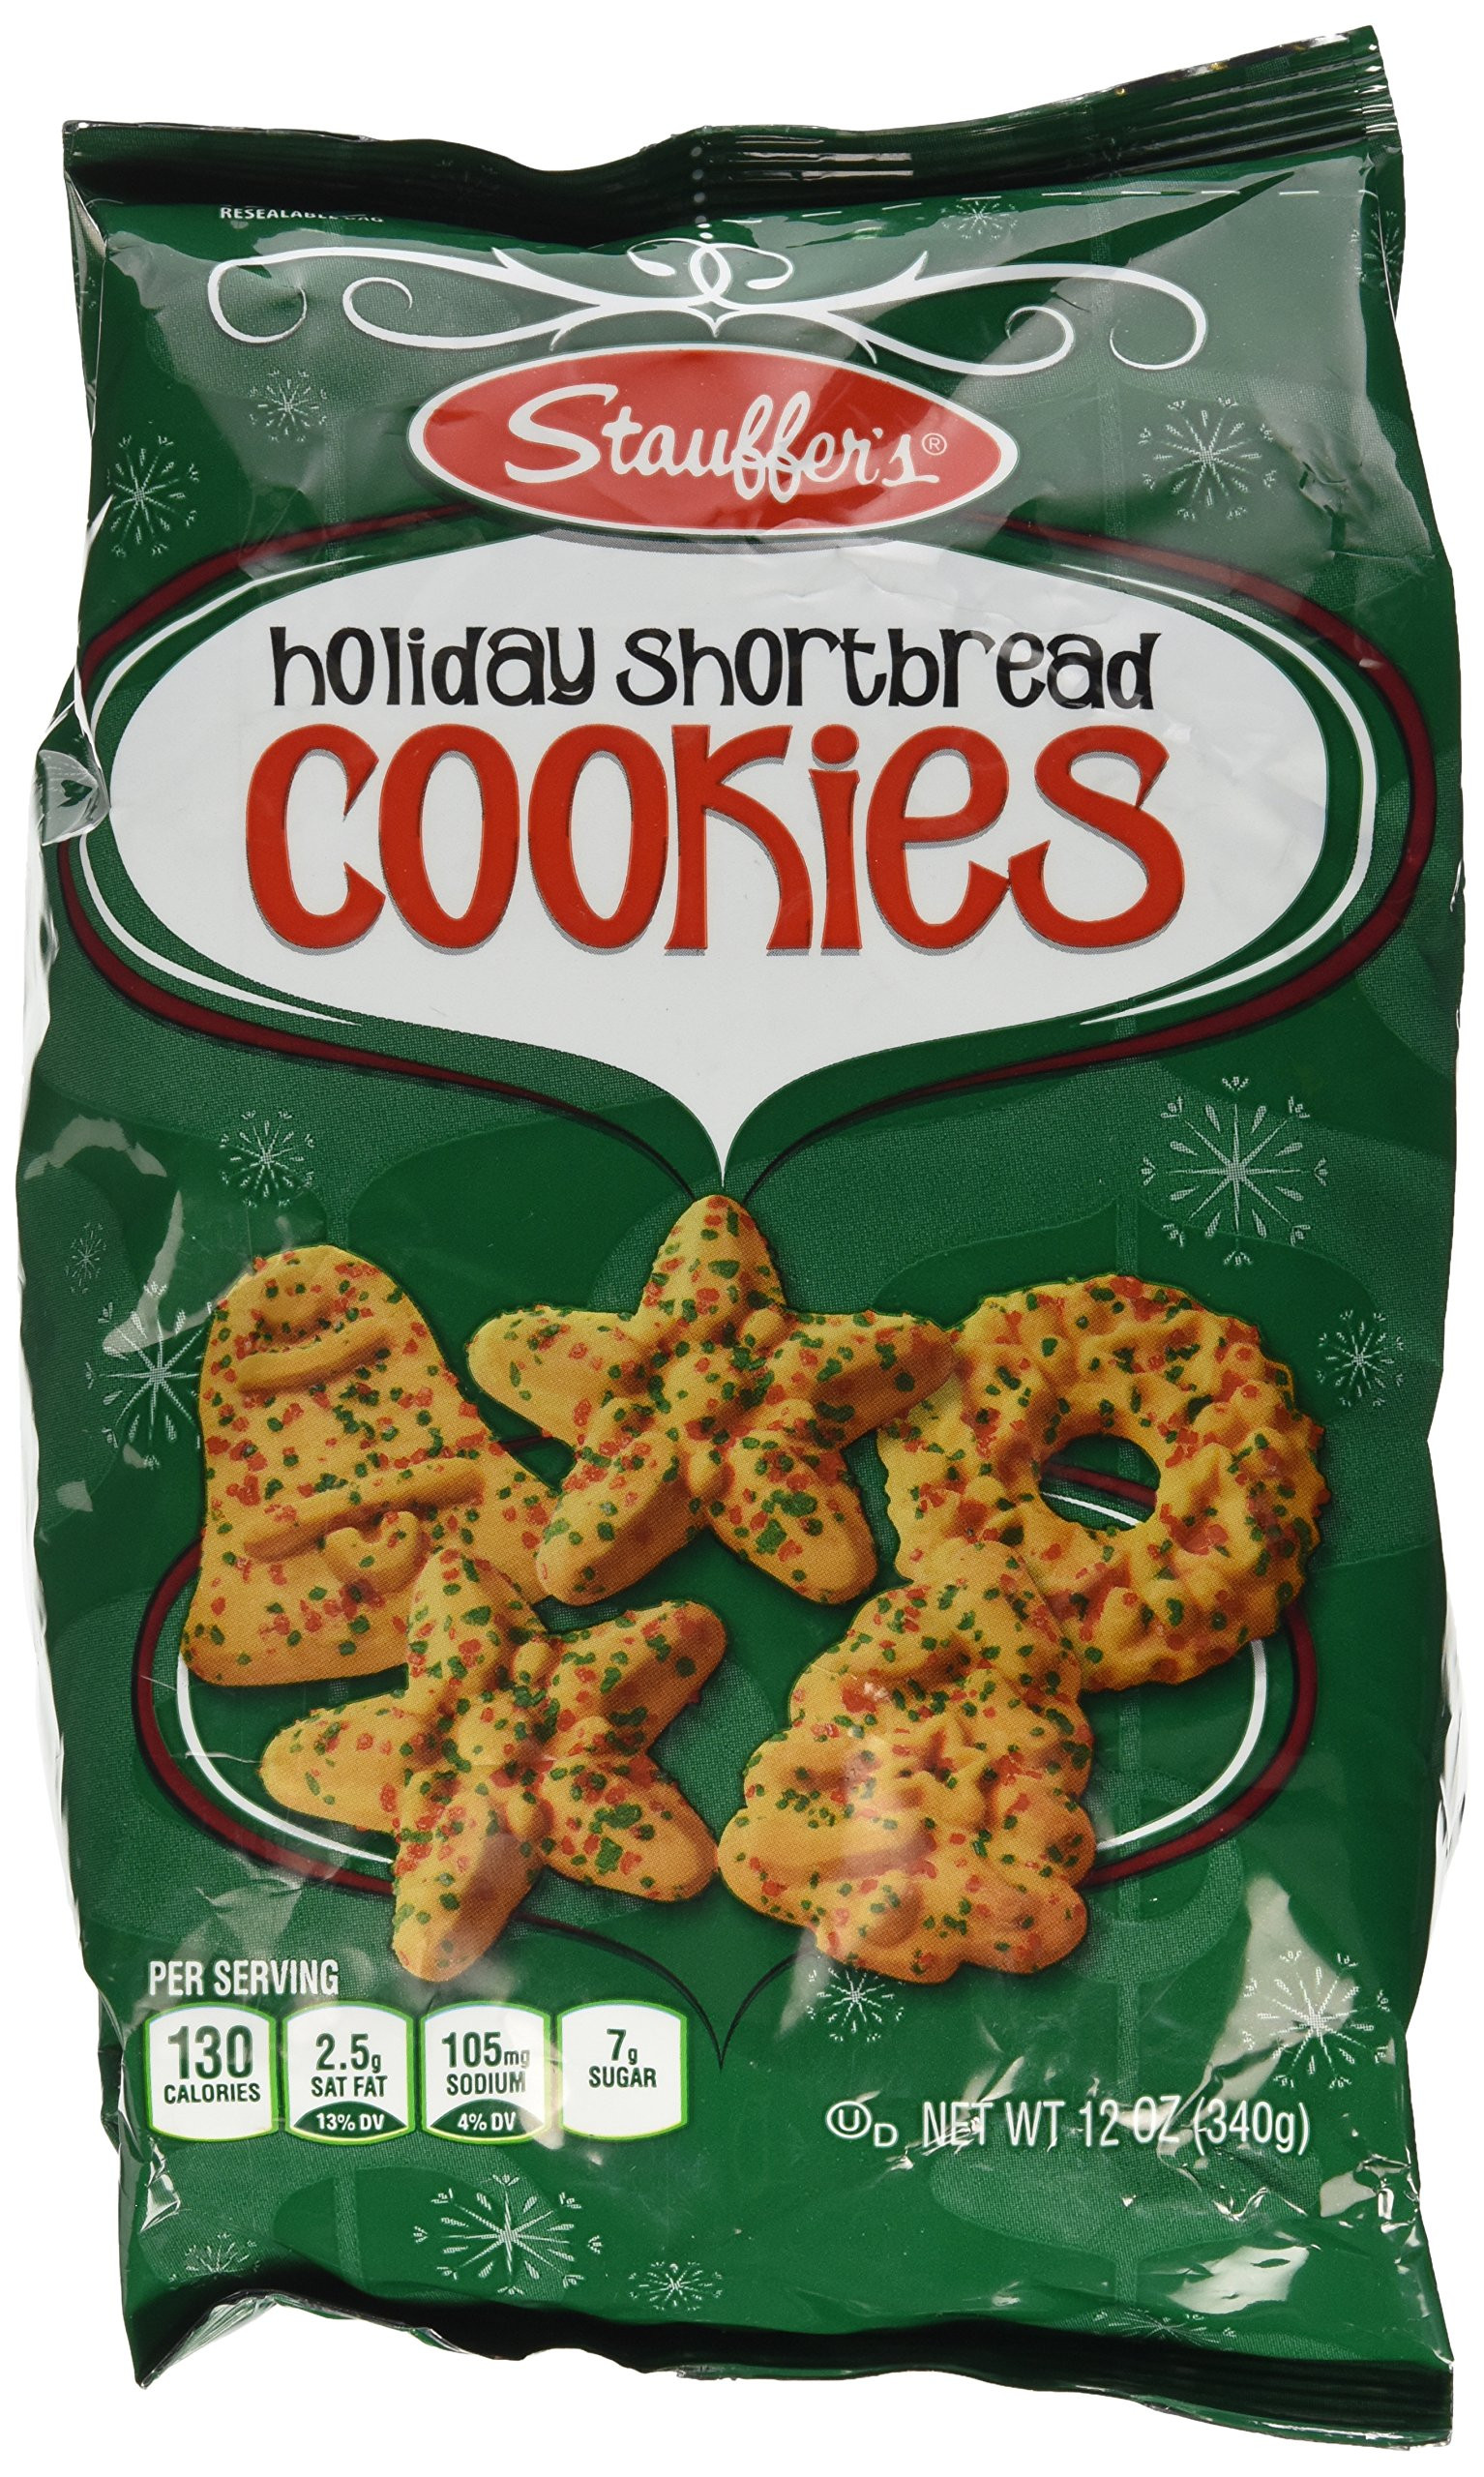 Stauffer Christmas Cookies
 Amazon Stauffer s White Fudge Shortbread Cookies for